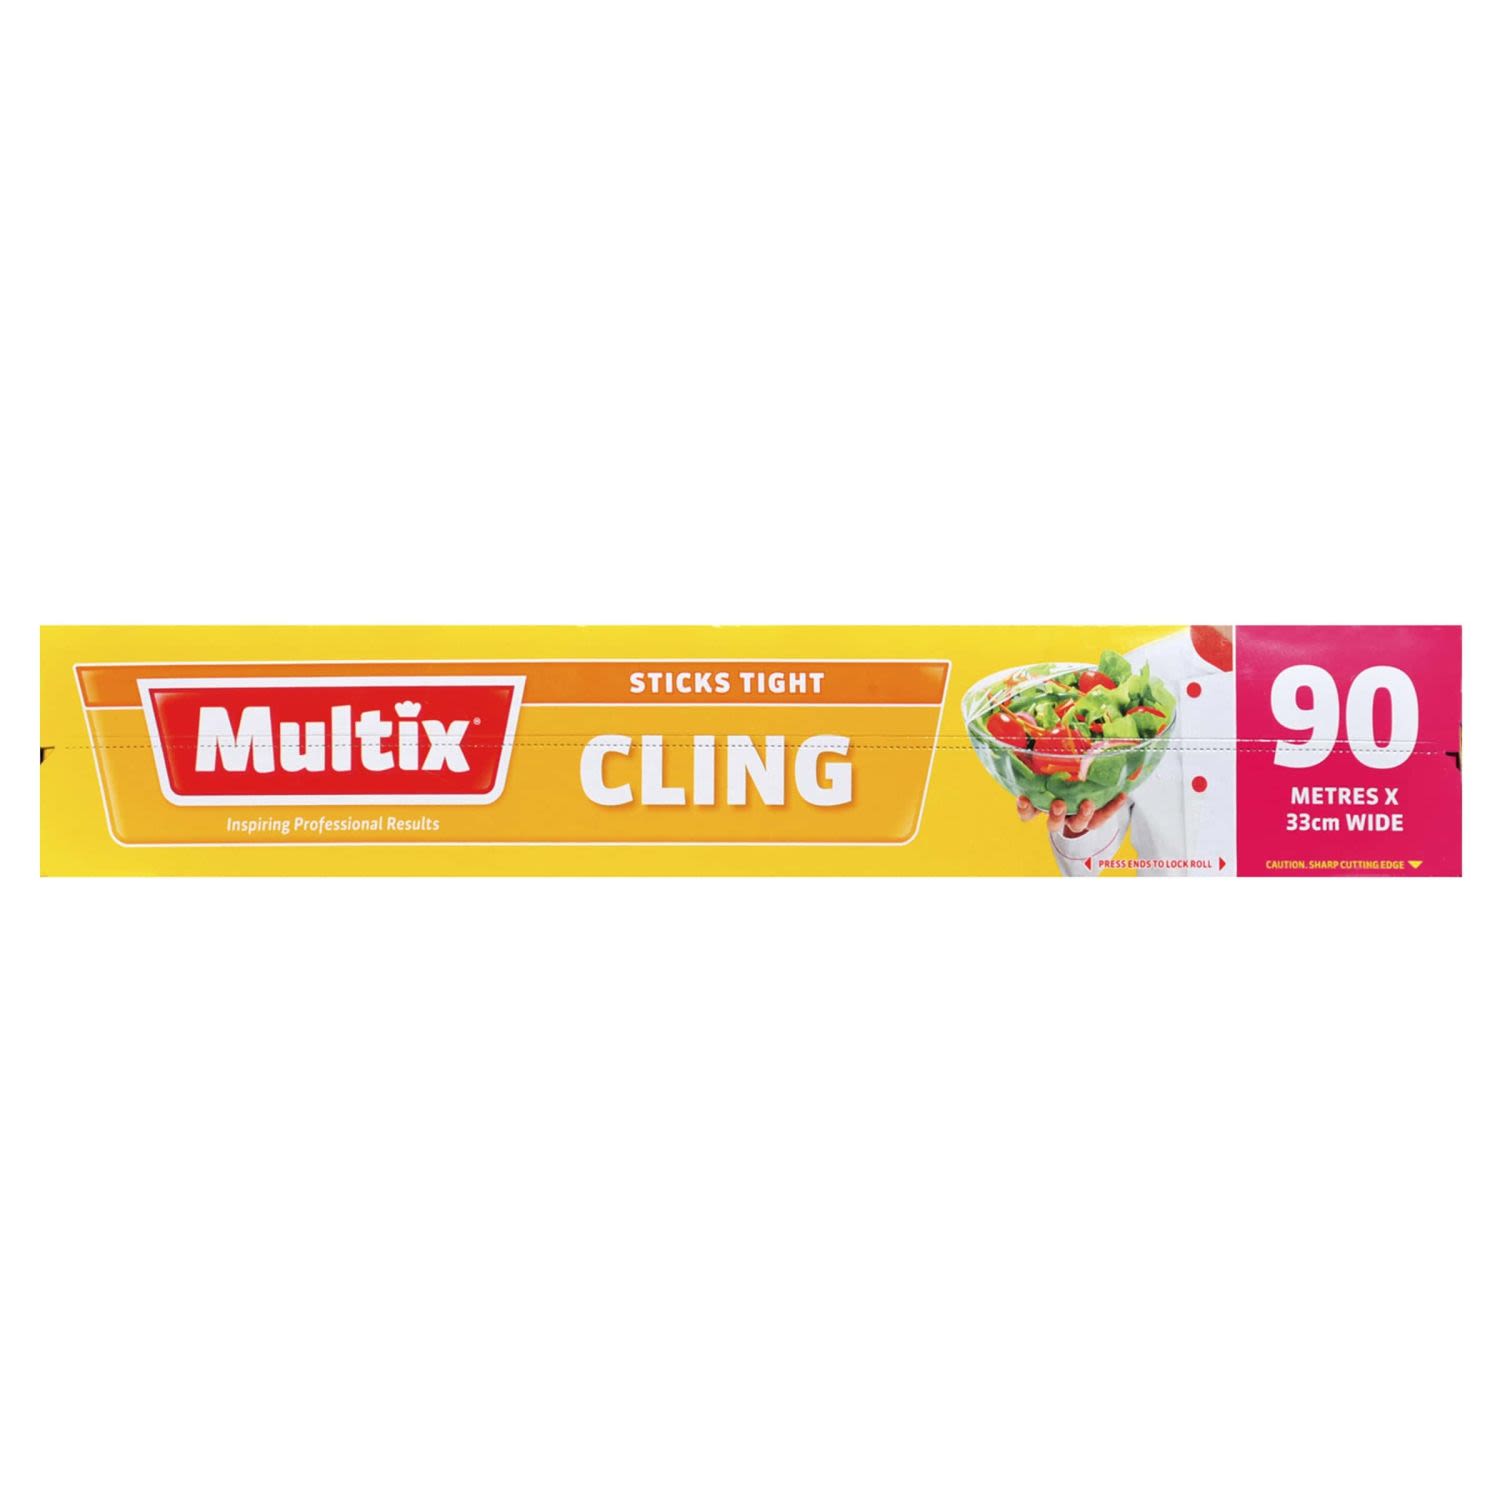 Multix Cling 90m x 33cm, 1 Each